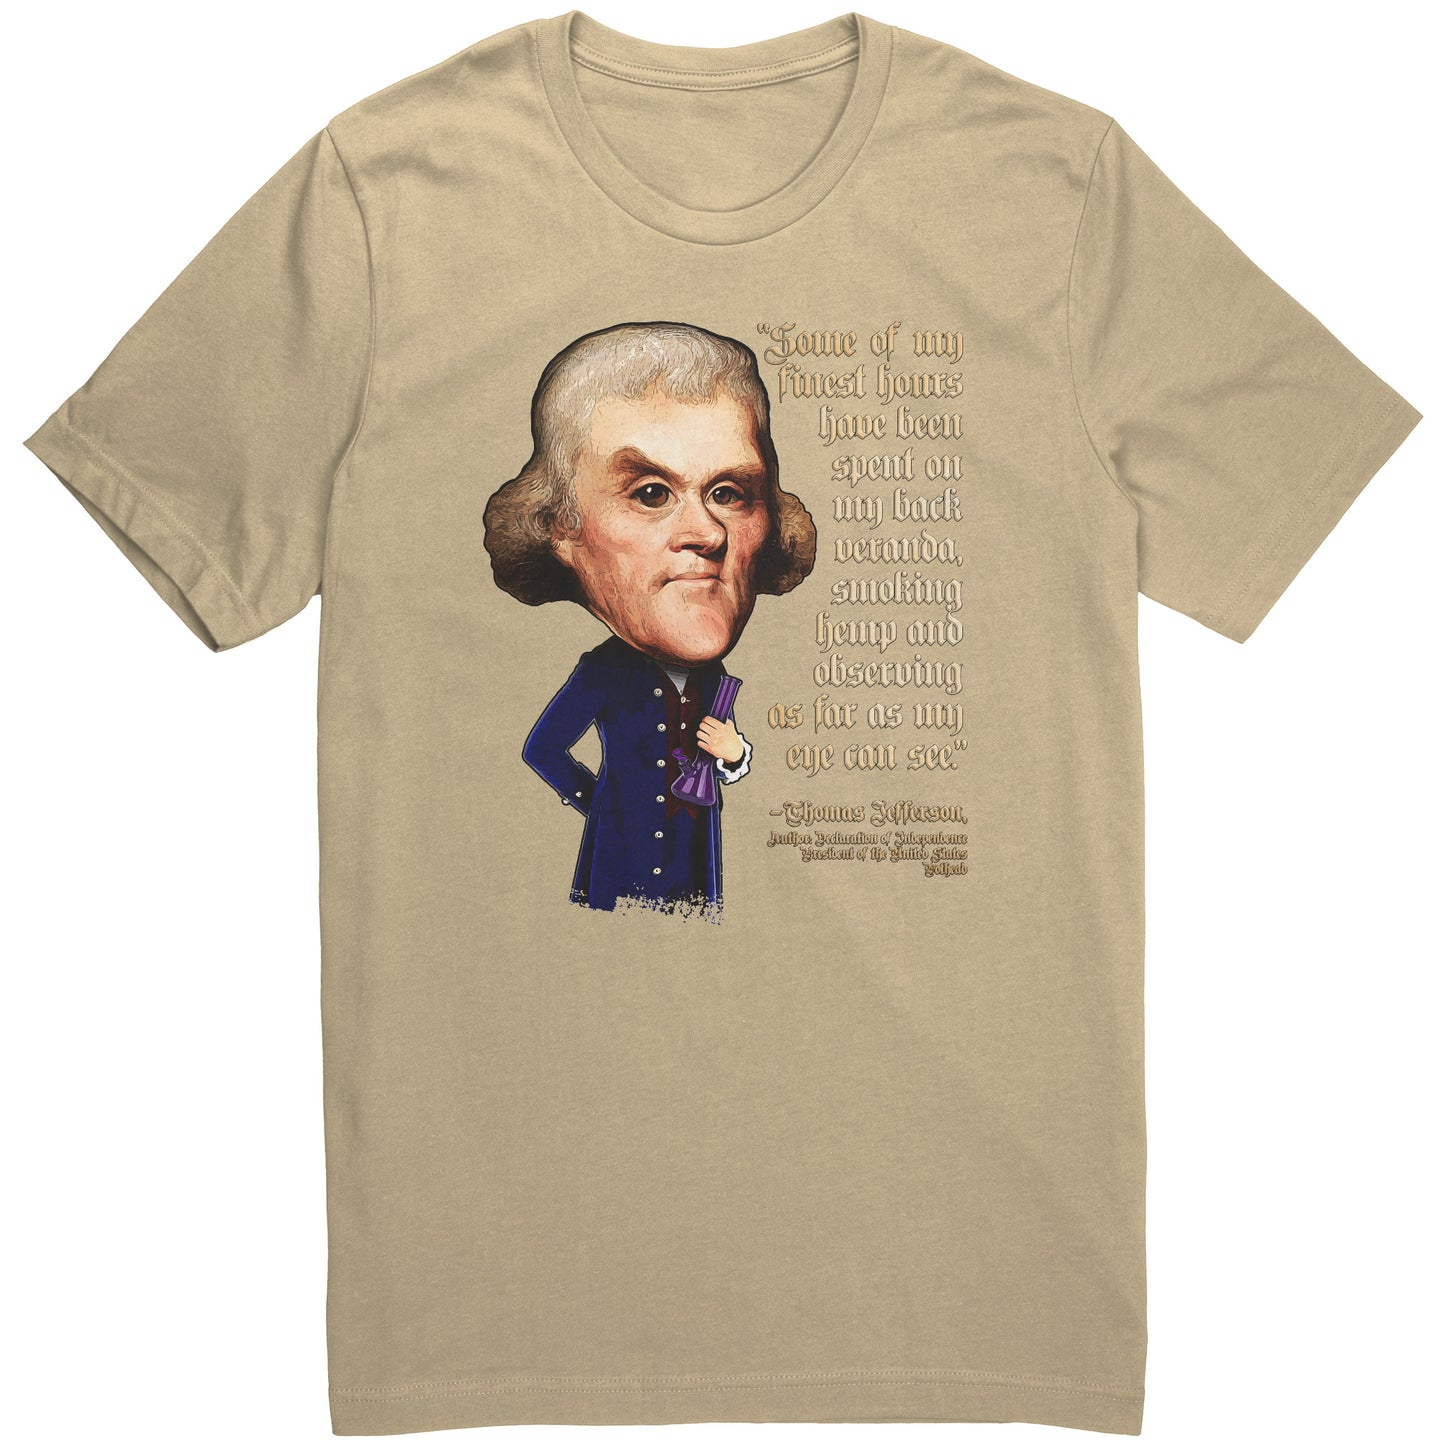 Famous Cannabis Quotes - Thomas Jefferson